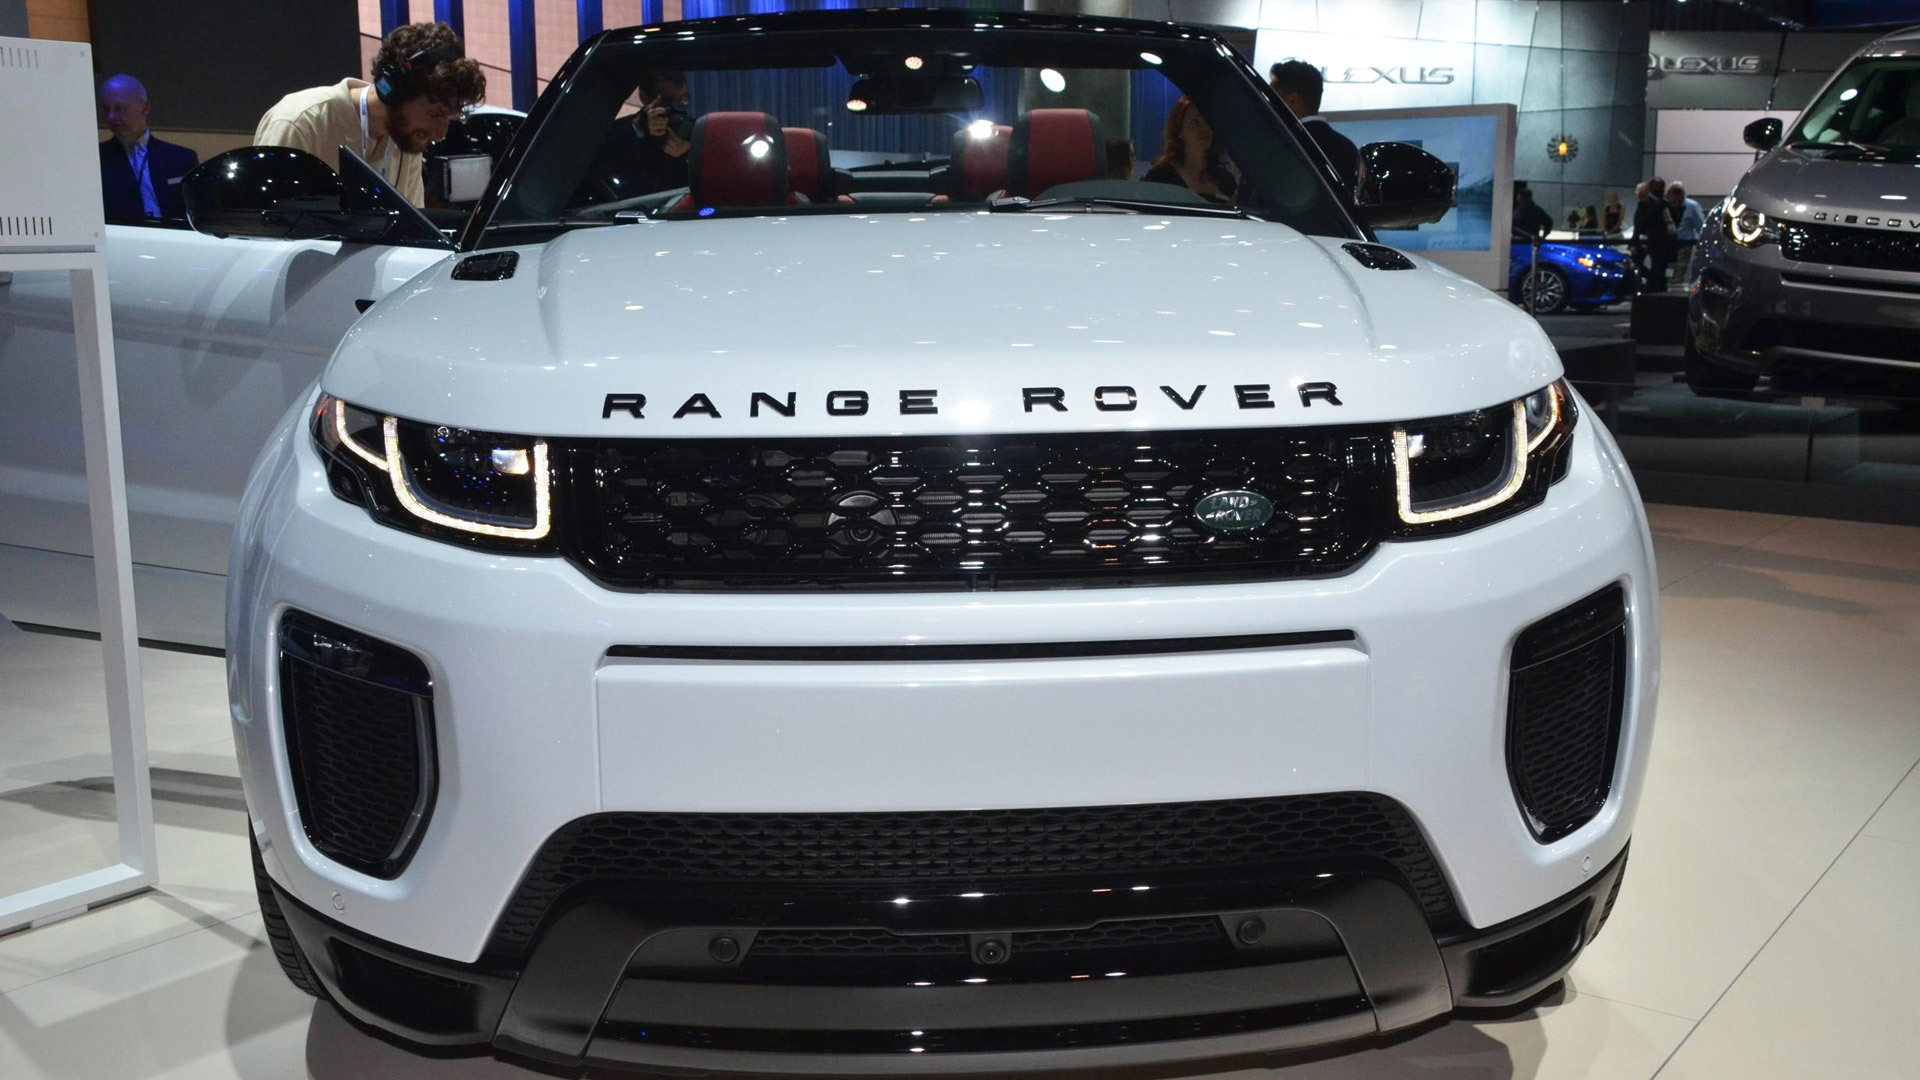 2017 Land Rover Range Rover Evoque Convertible, 2015 Los Angeles Auto Show